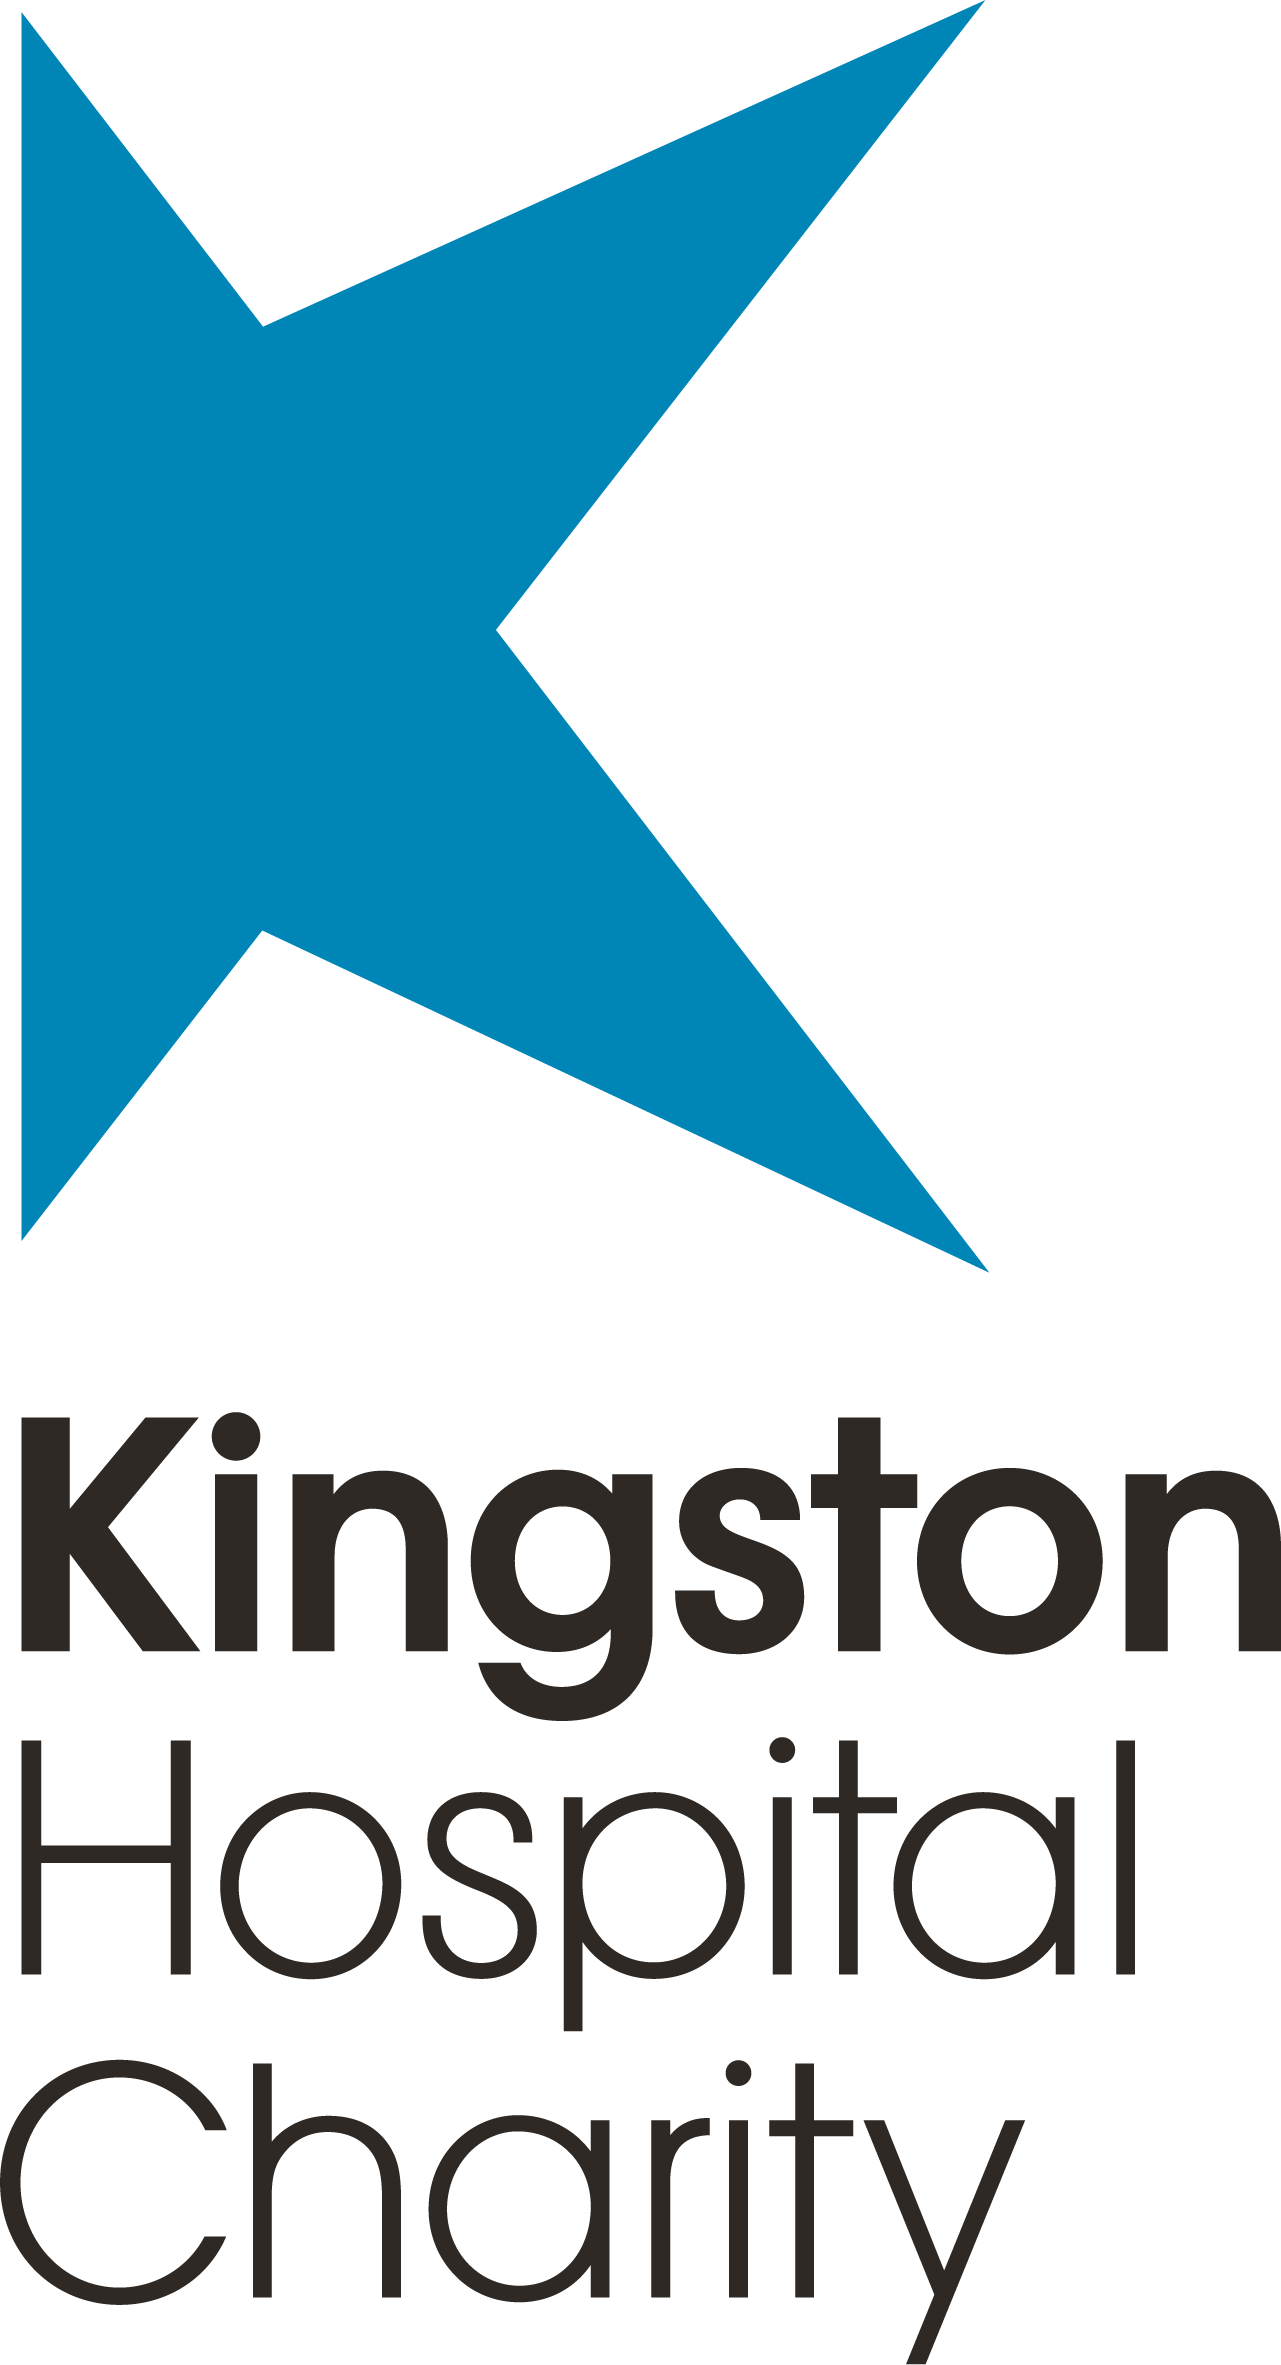 Kingston Hospital Charity